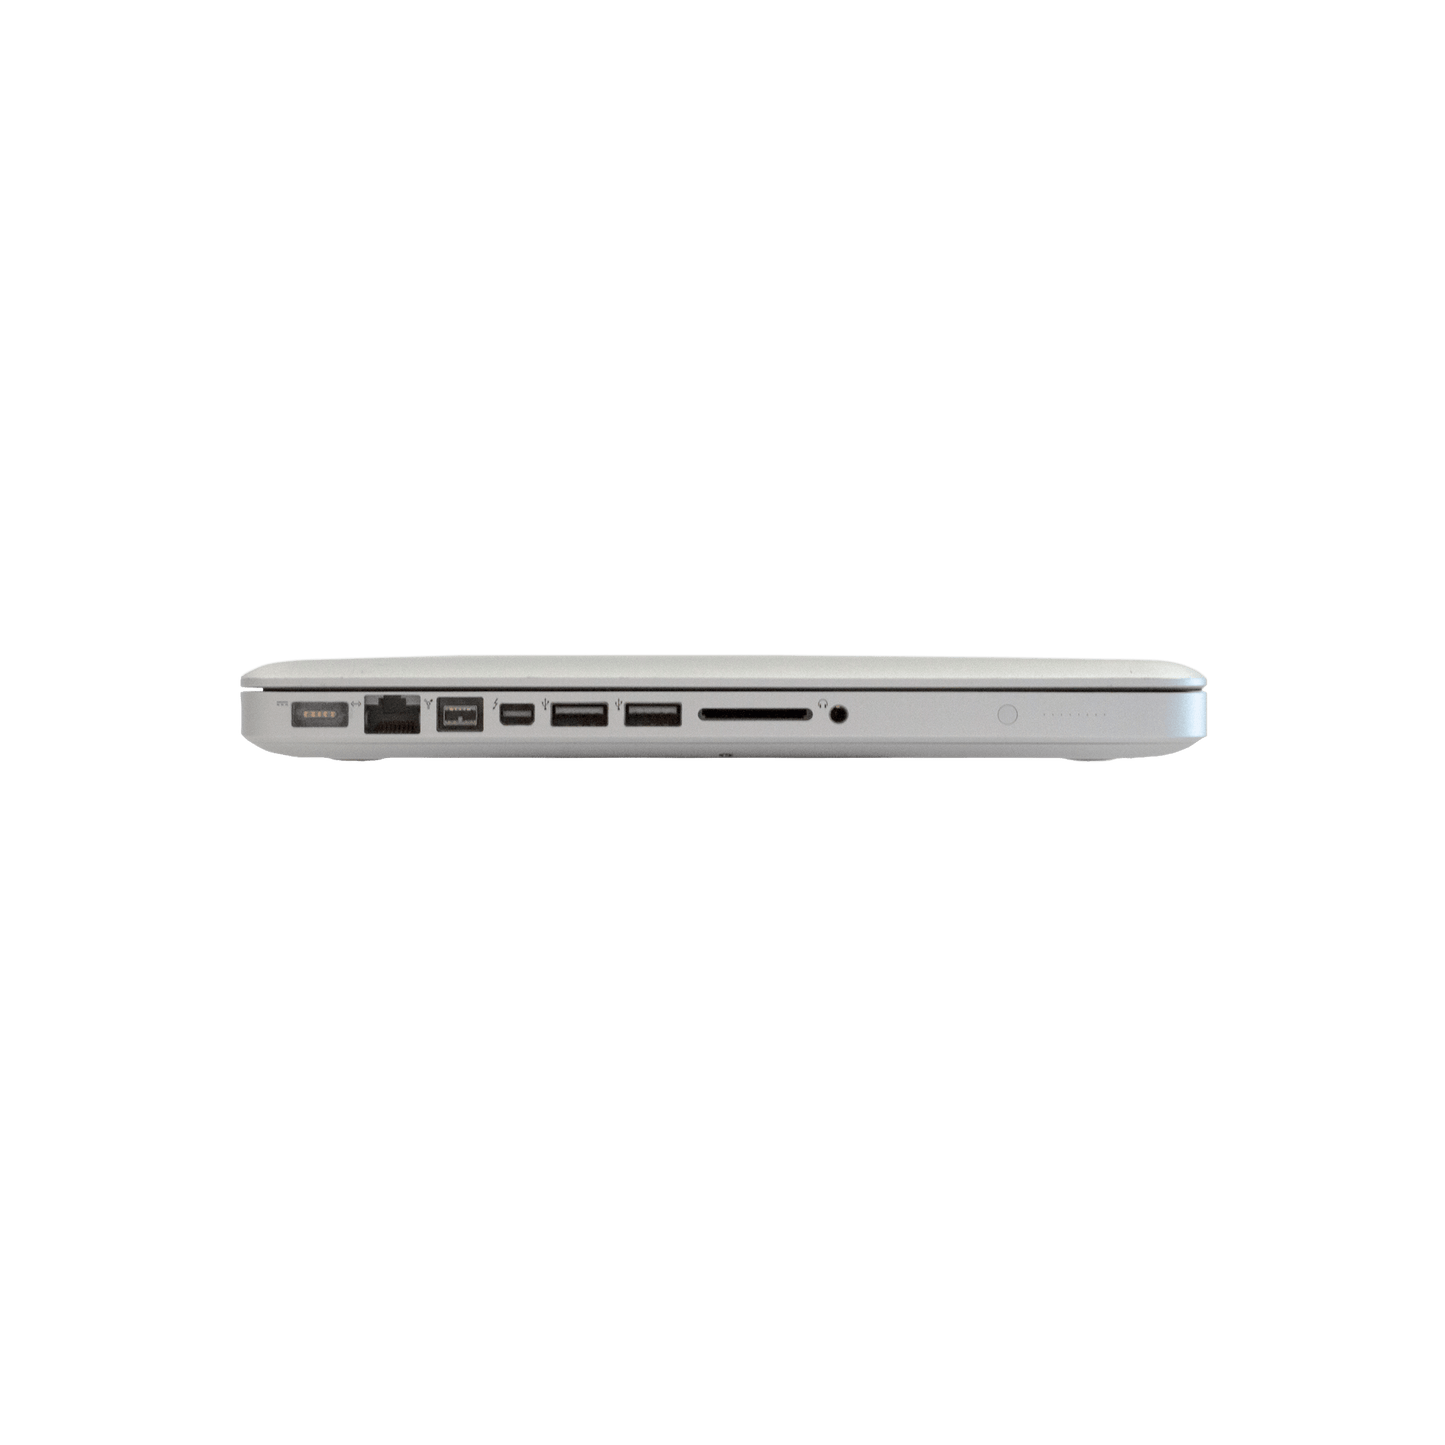 Refurbished MacBook Pro 13" i5 2.5 8gb 256gb